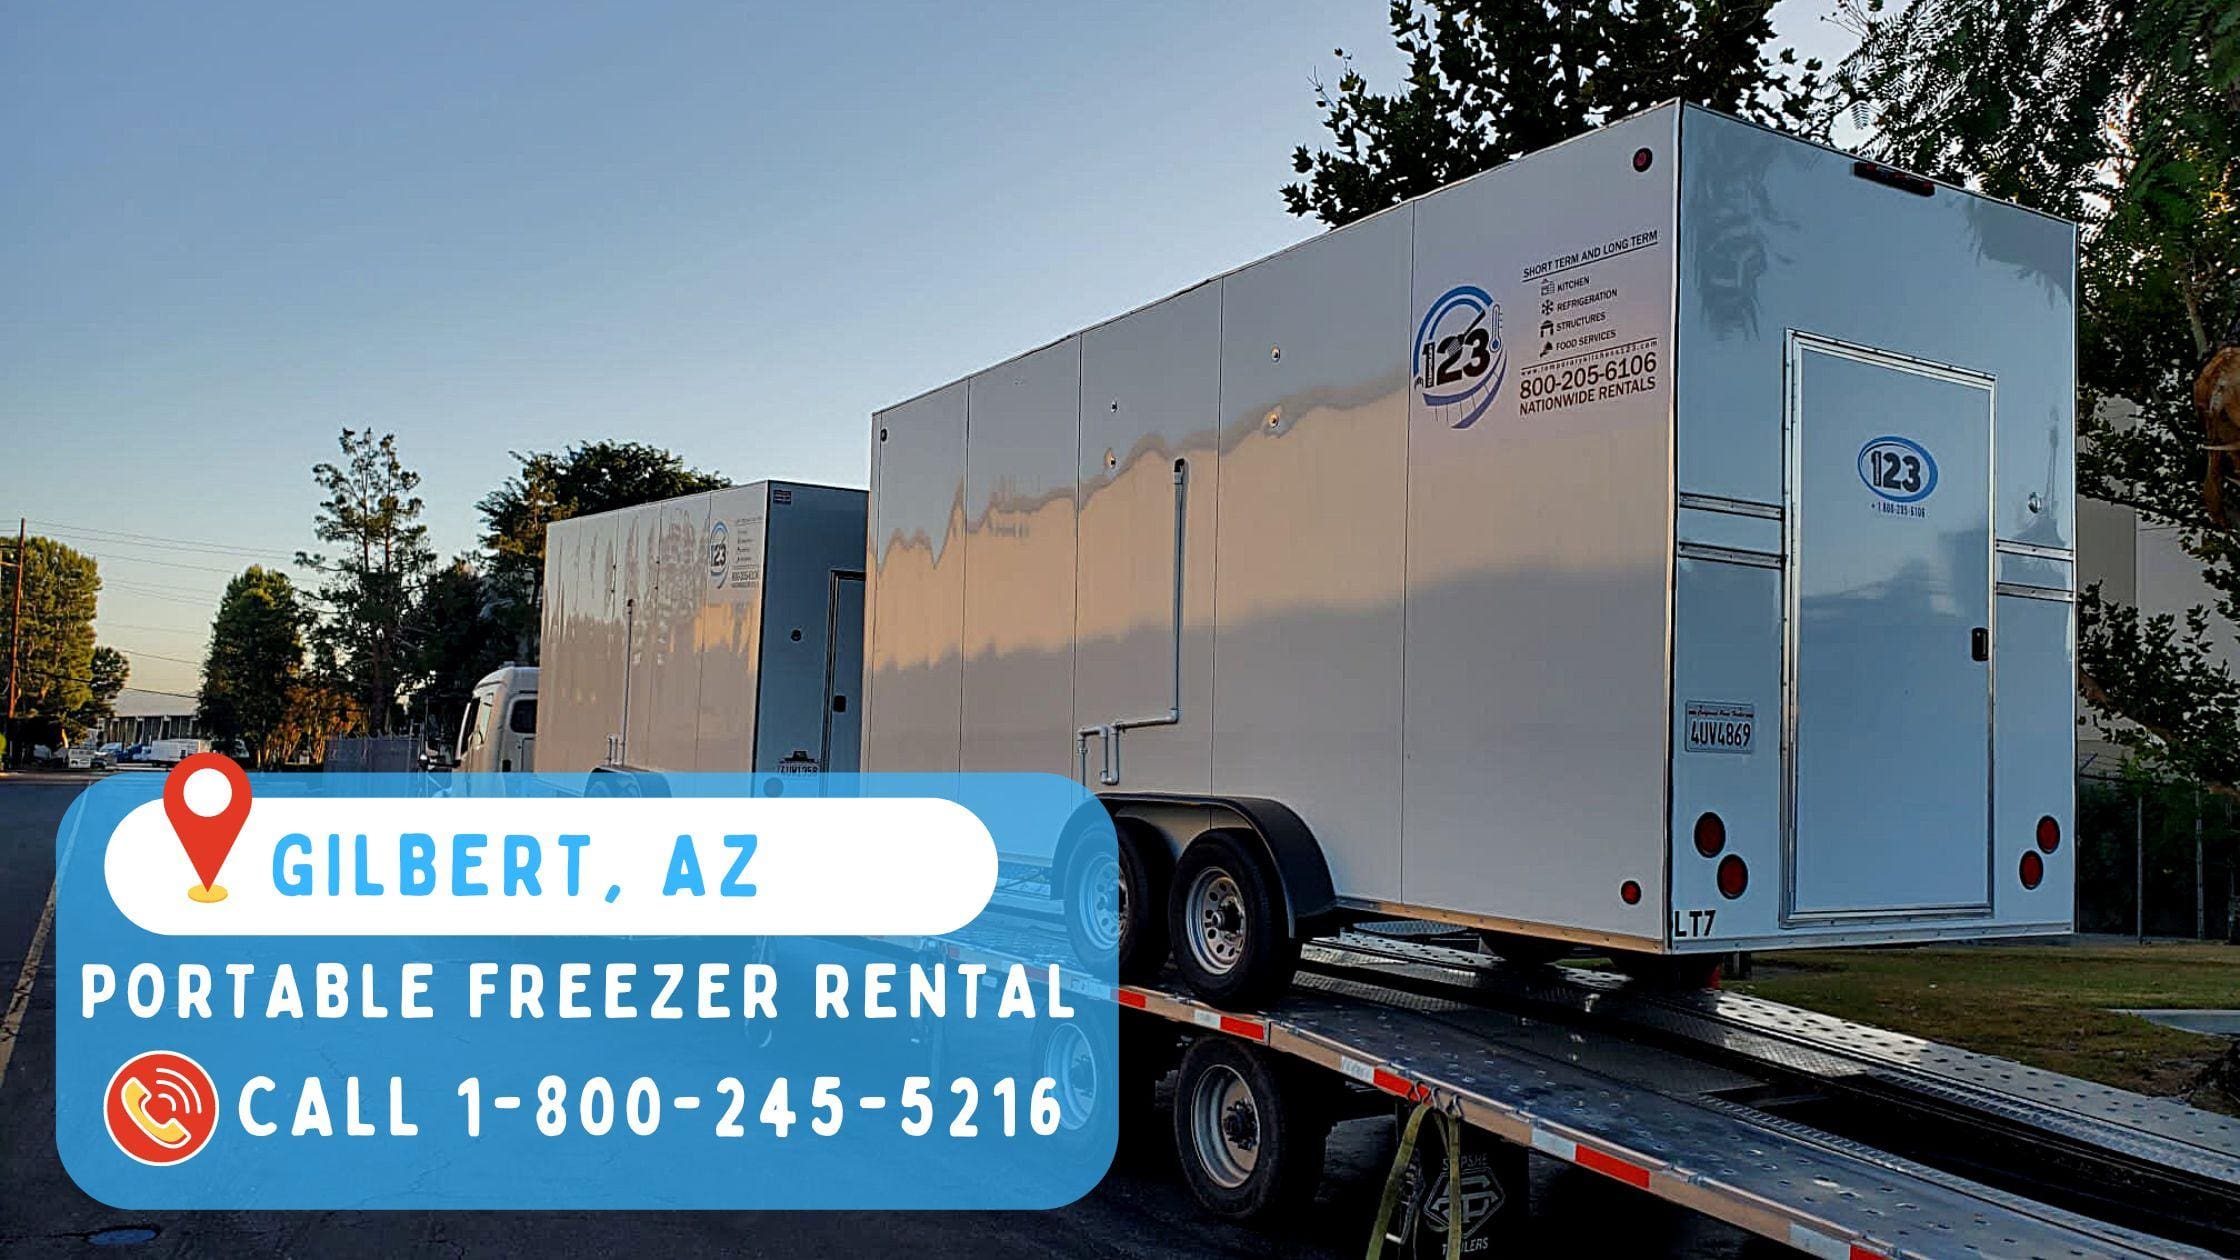 Portable Freezer Rental in Gilbert, AZ